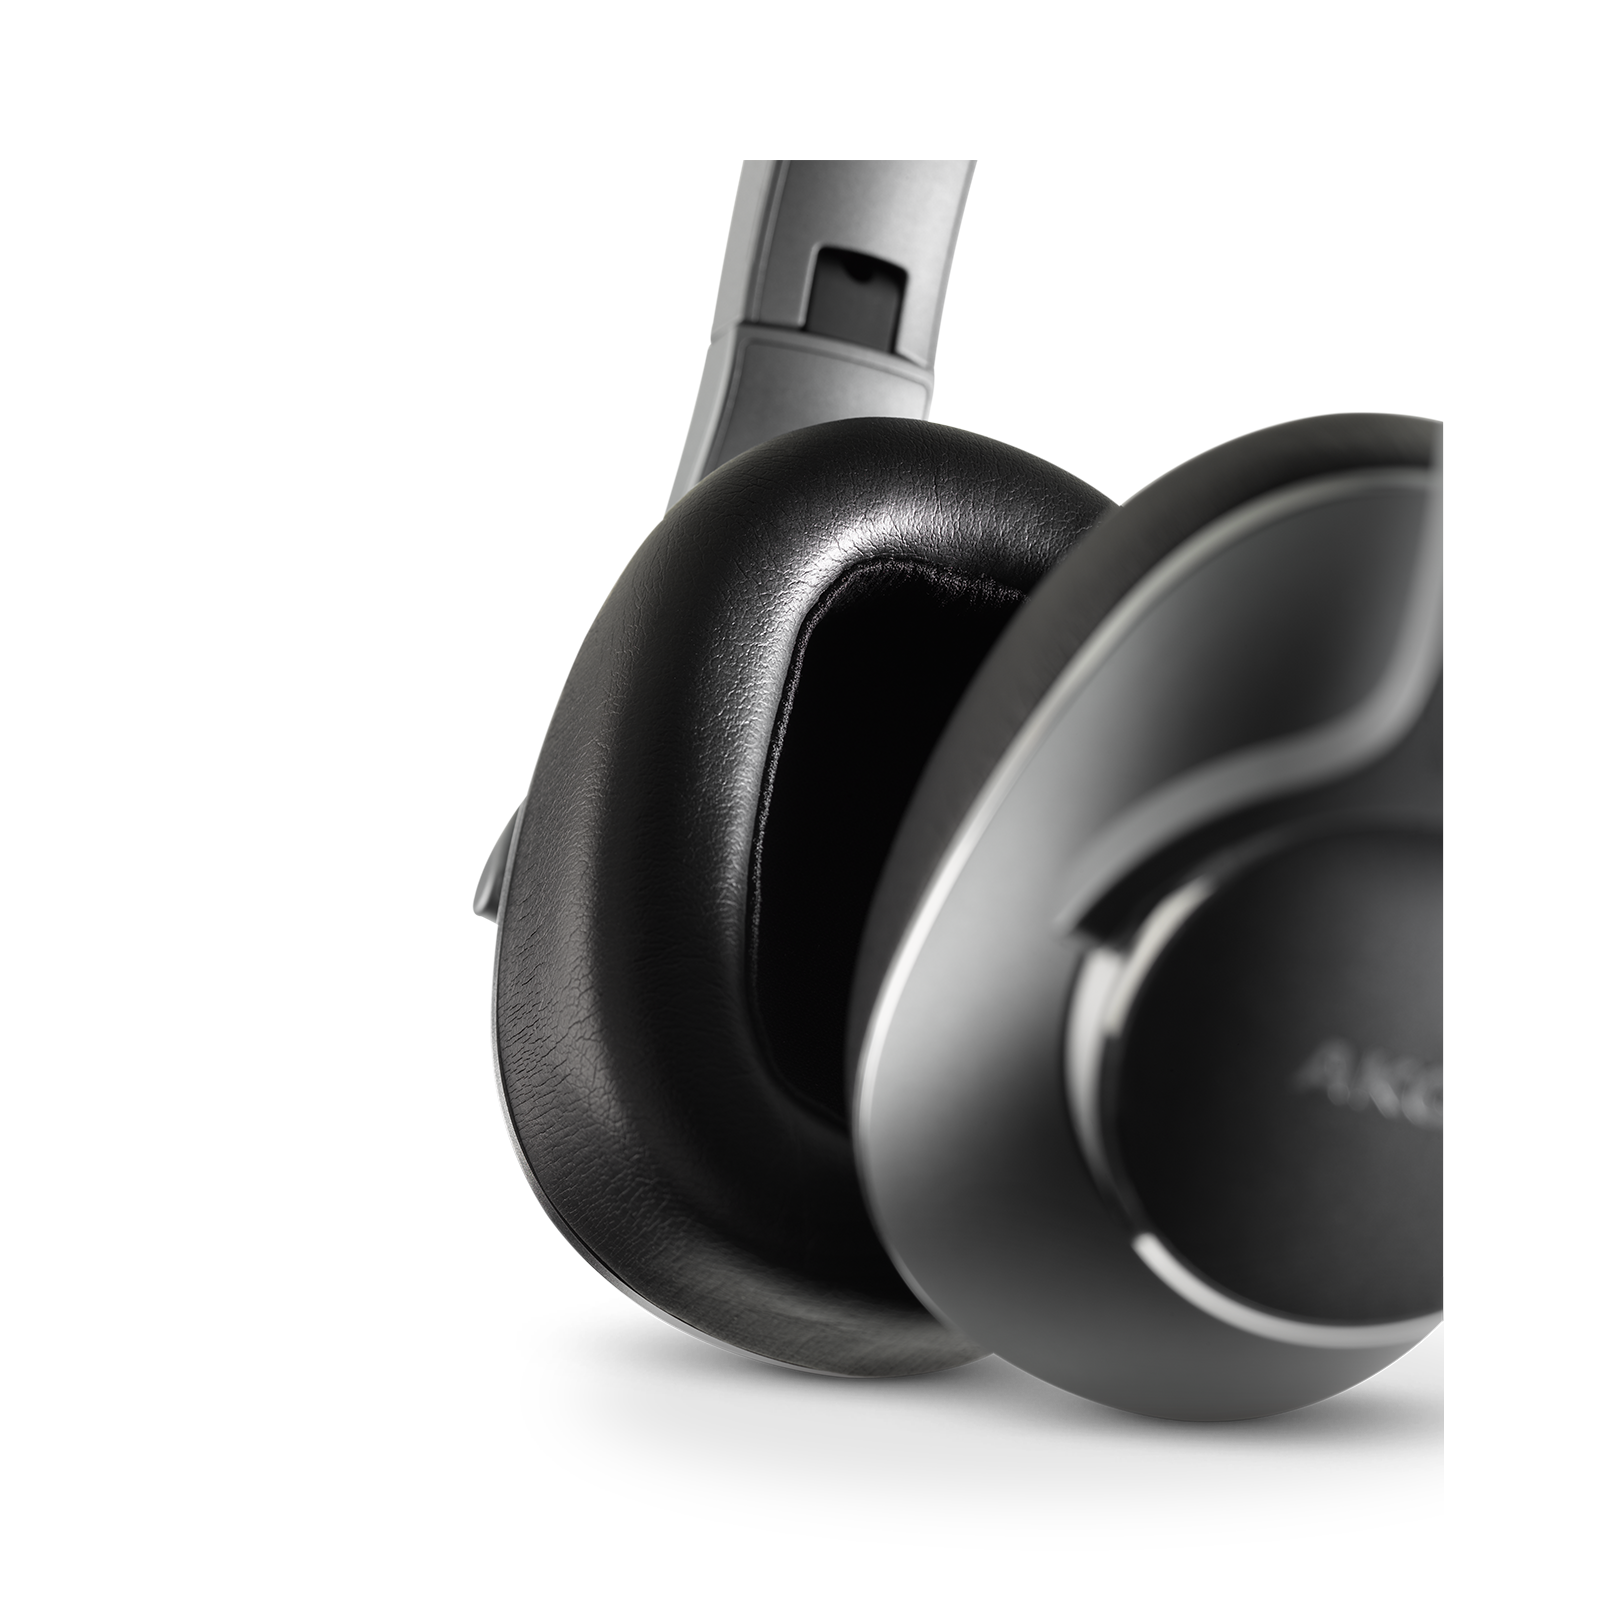 AKG N700NC Wireless - Silver - Wireless, Adaptive Noise Cancelling Headphones - Detailshot 3